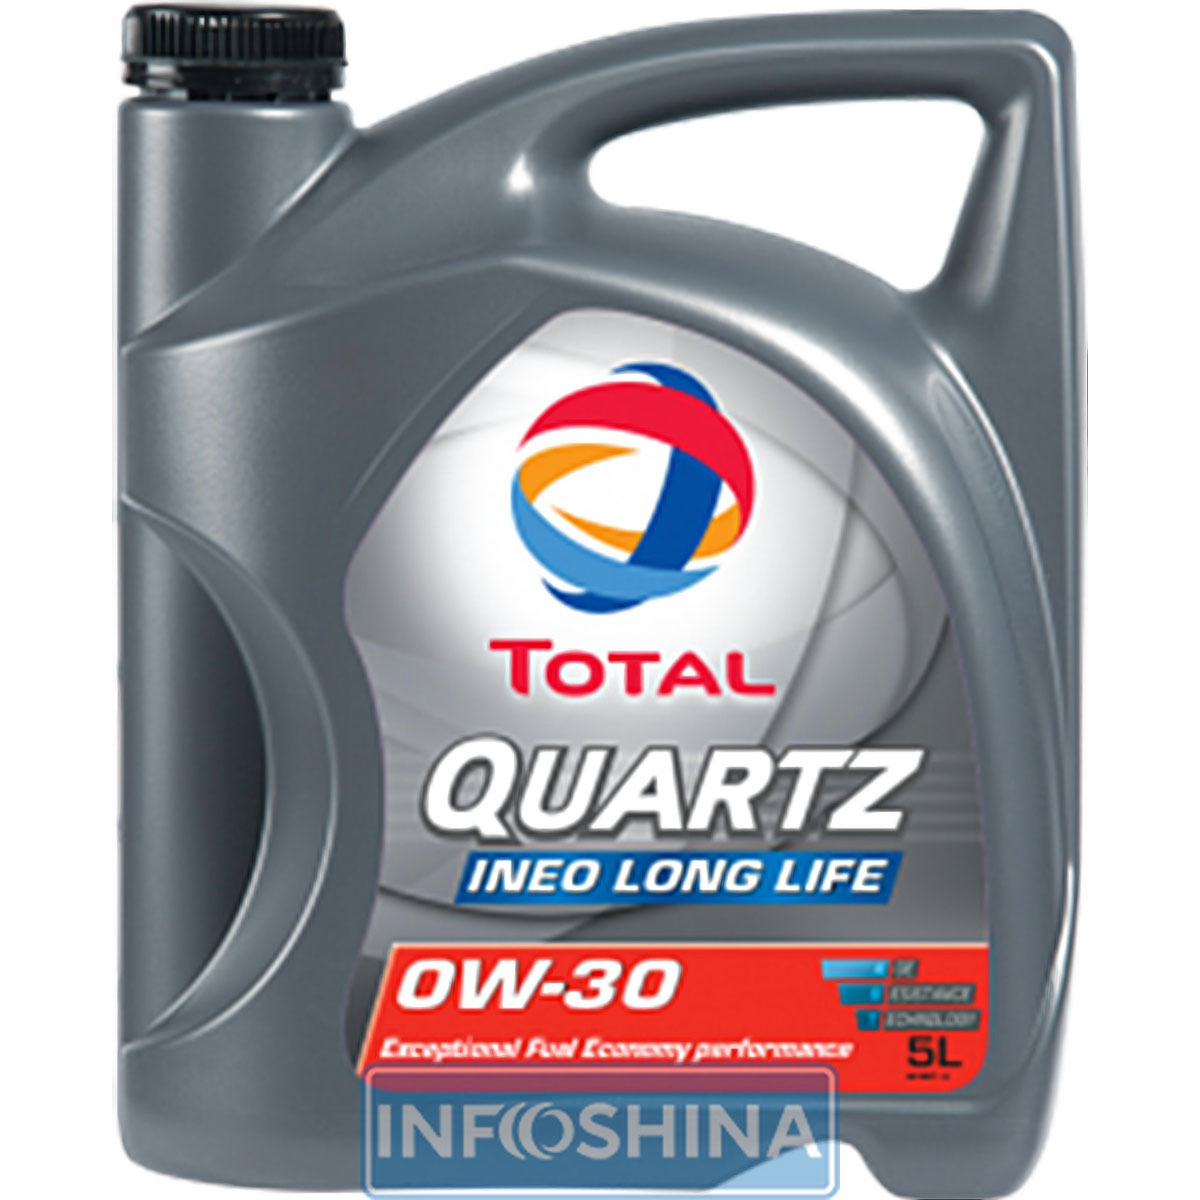 Total Quartz Ineo Long Life 0W-30